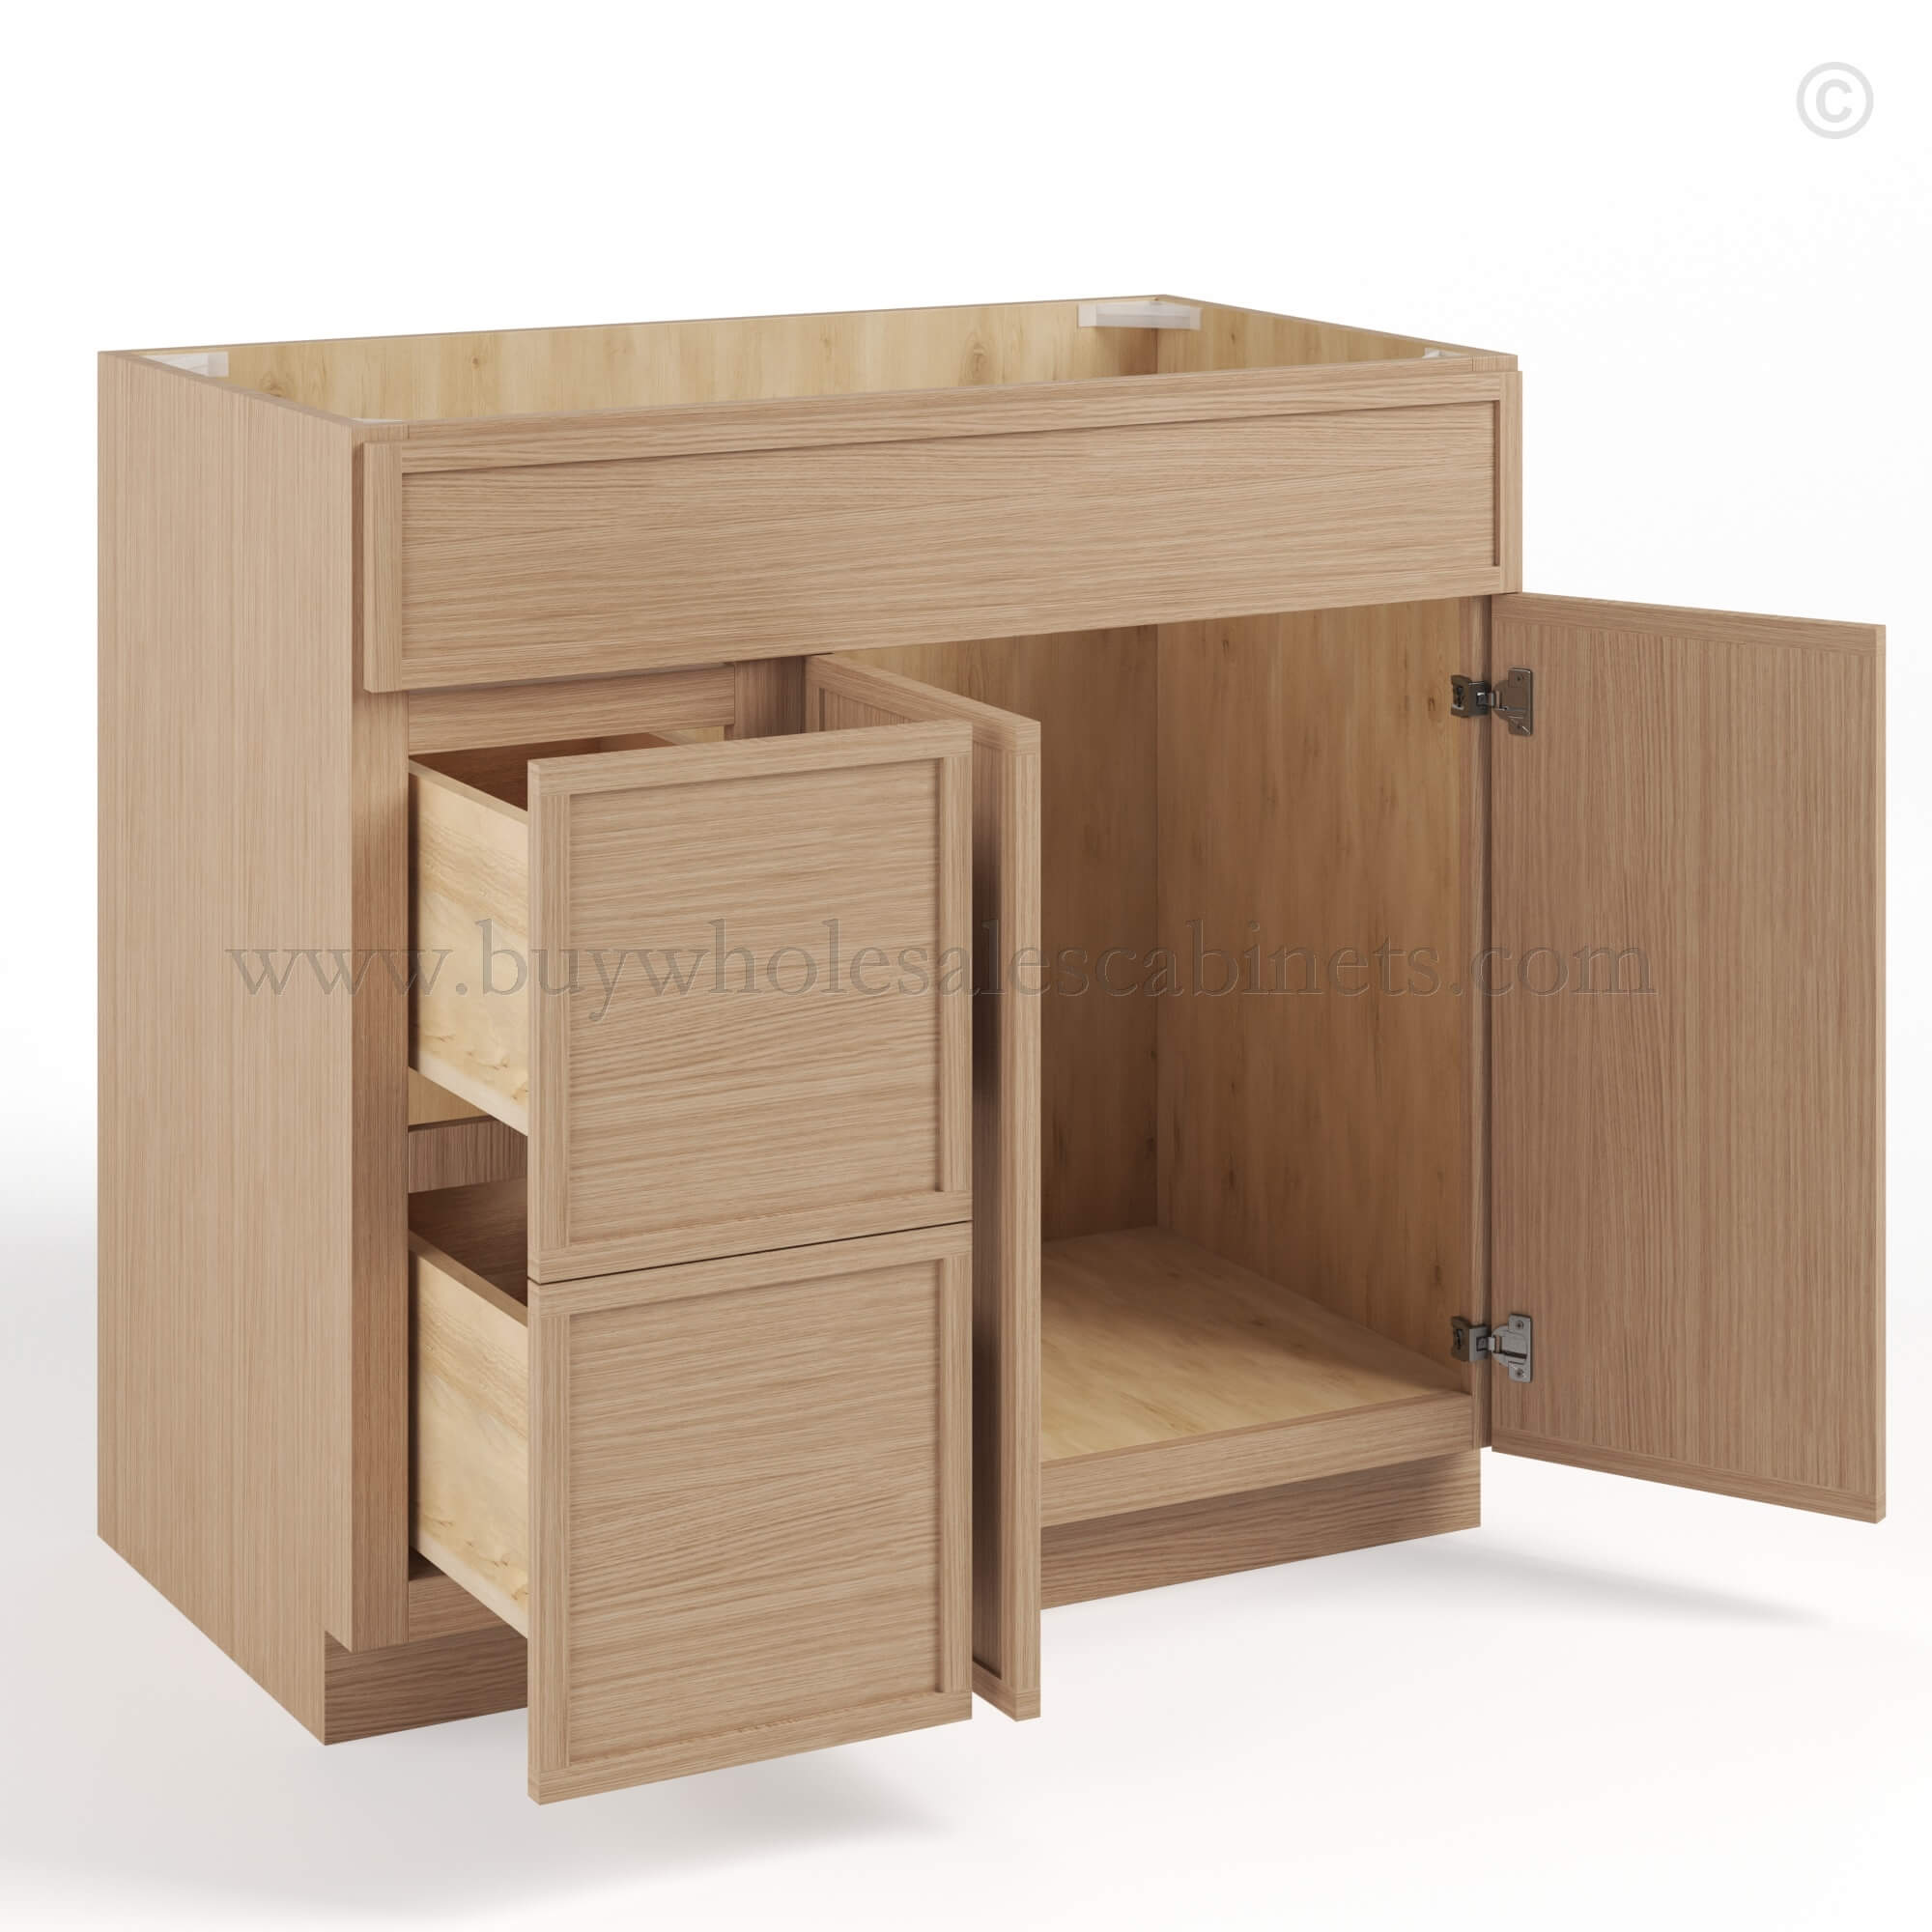 Slim Oak Shaker Vanity Drawer Cabinet, rta cabinets, wholesale cabinets